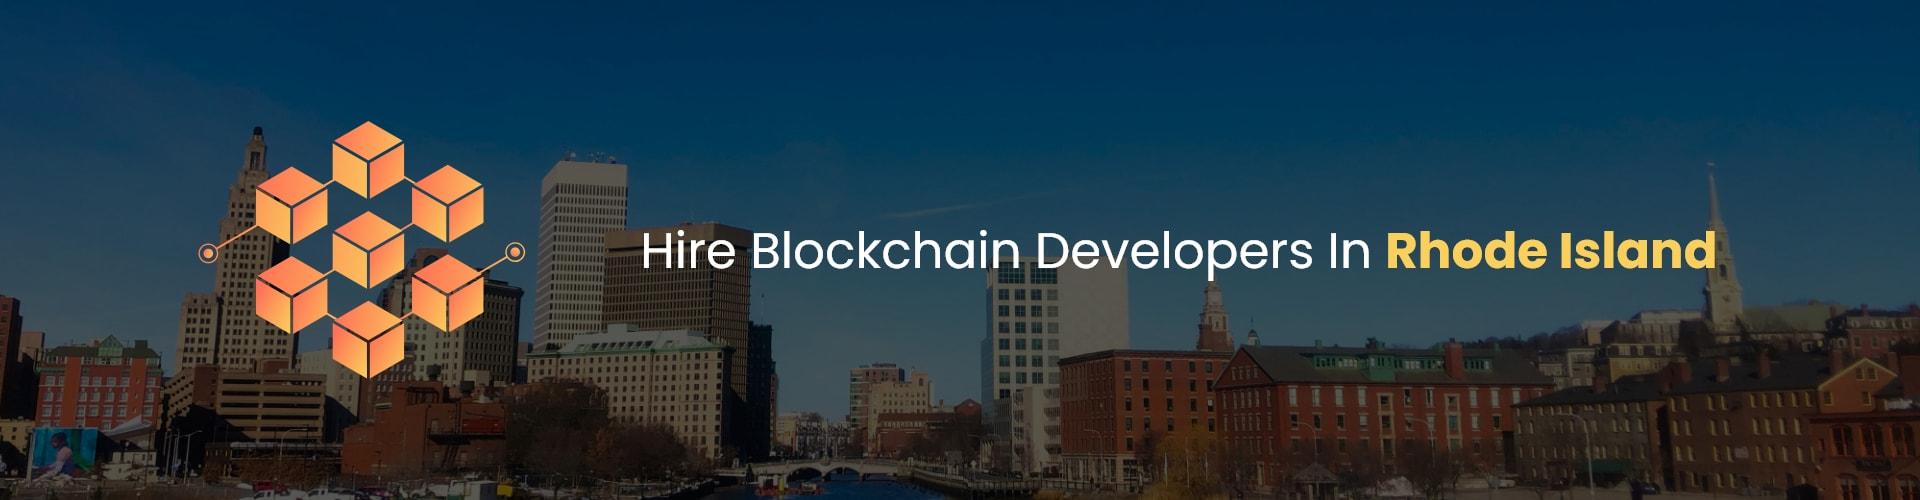 hire blockchain developers in rhode island